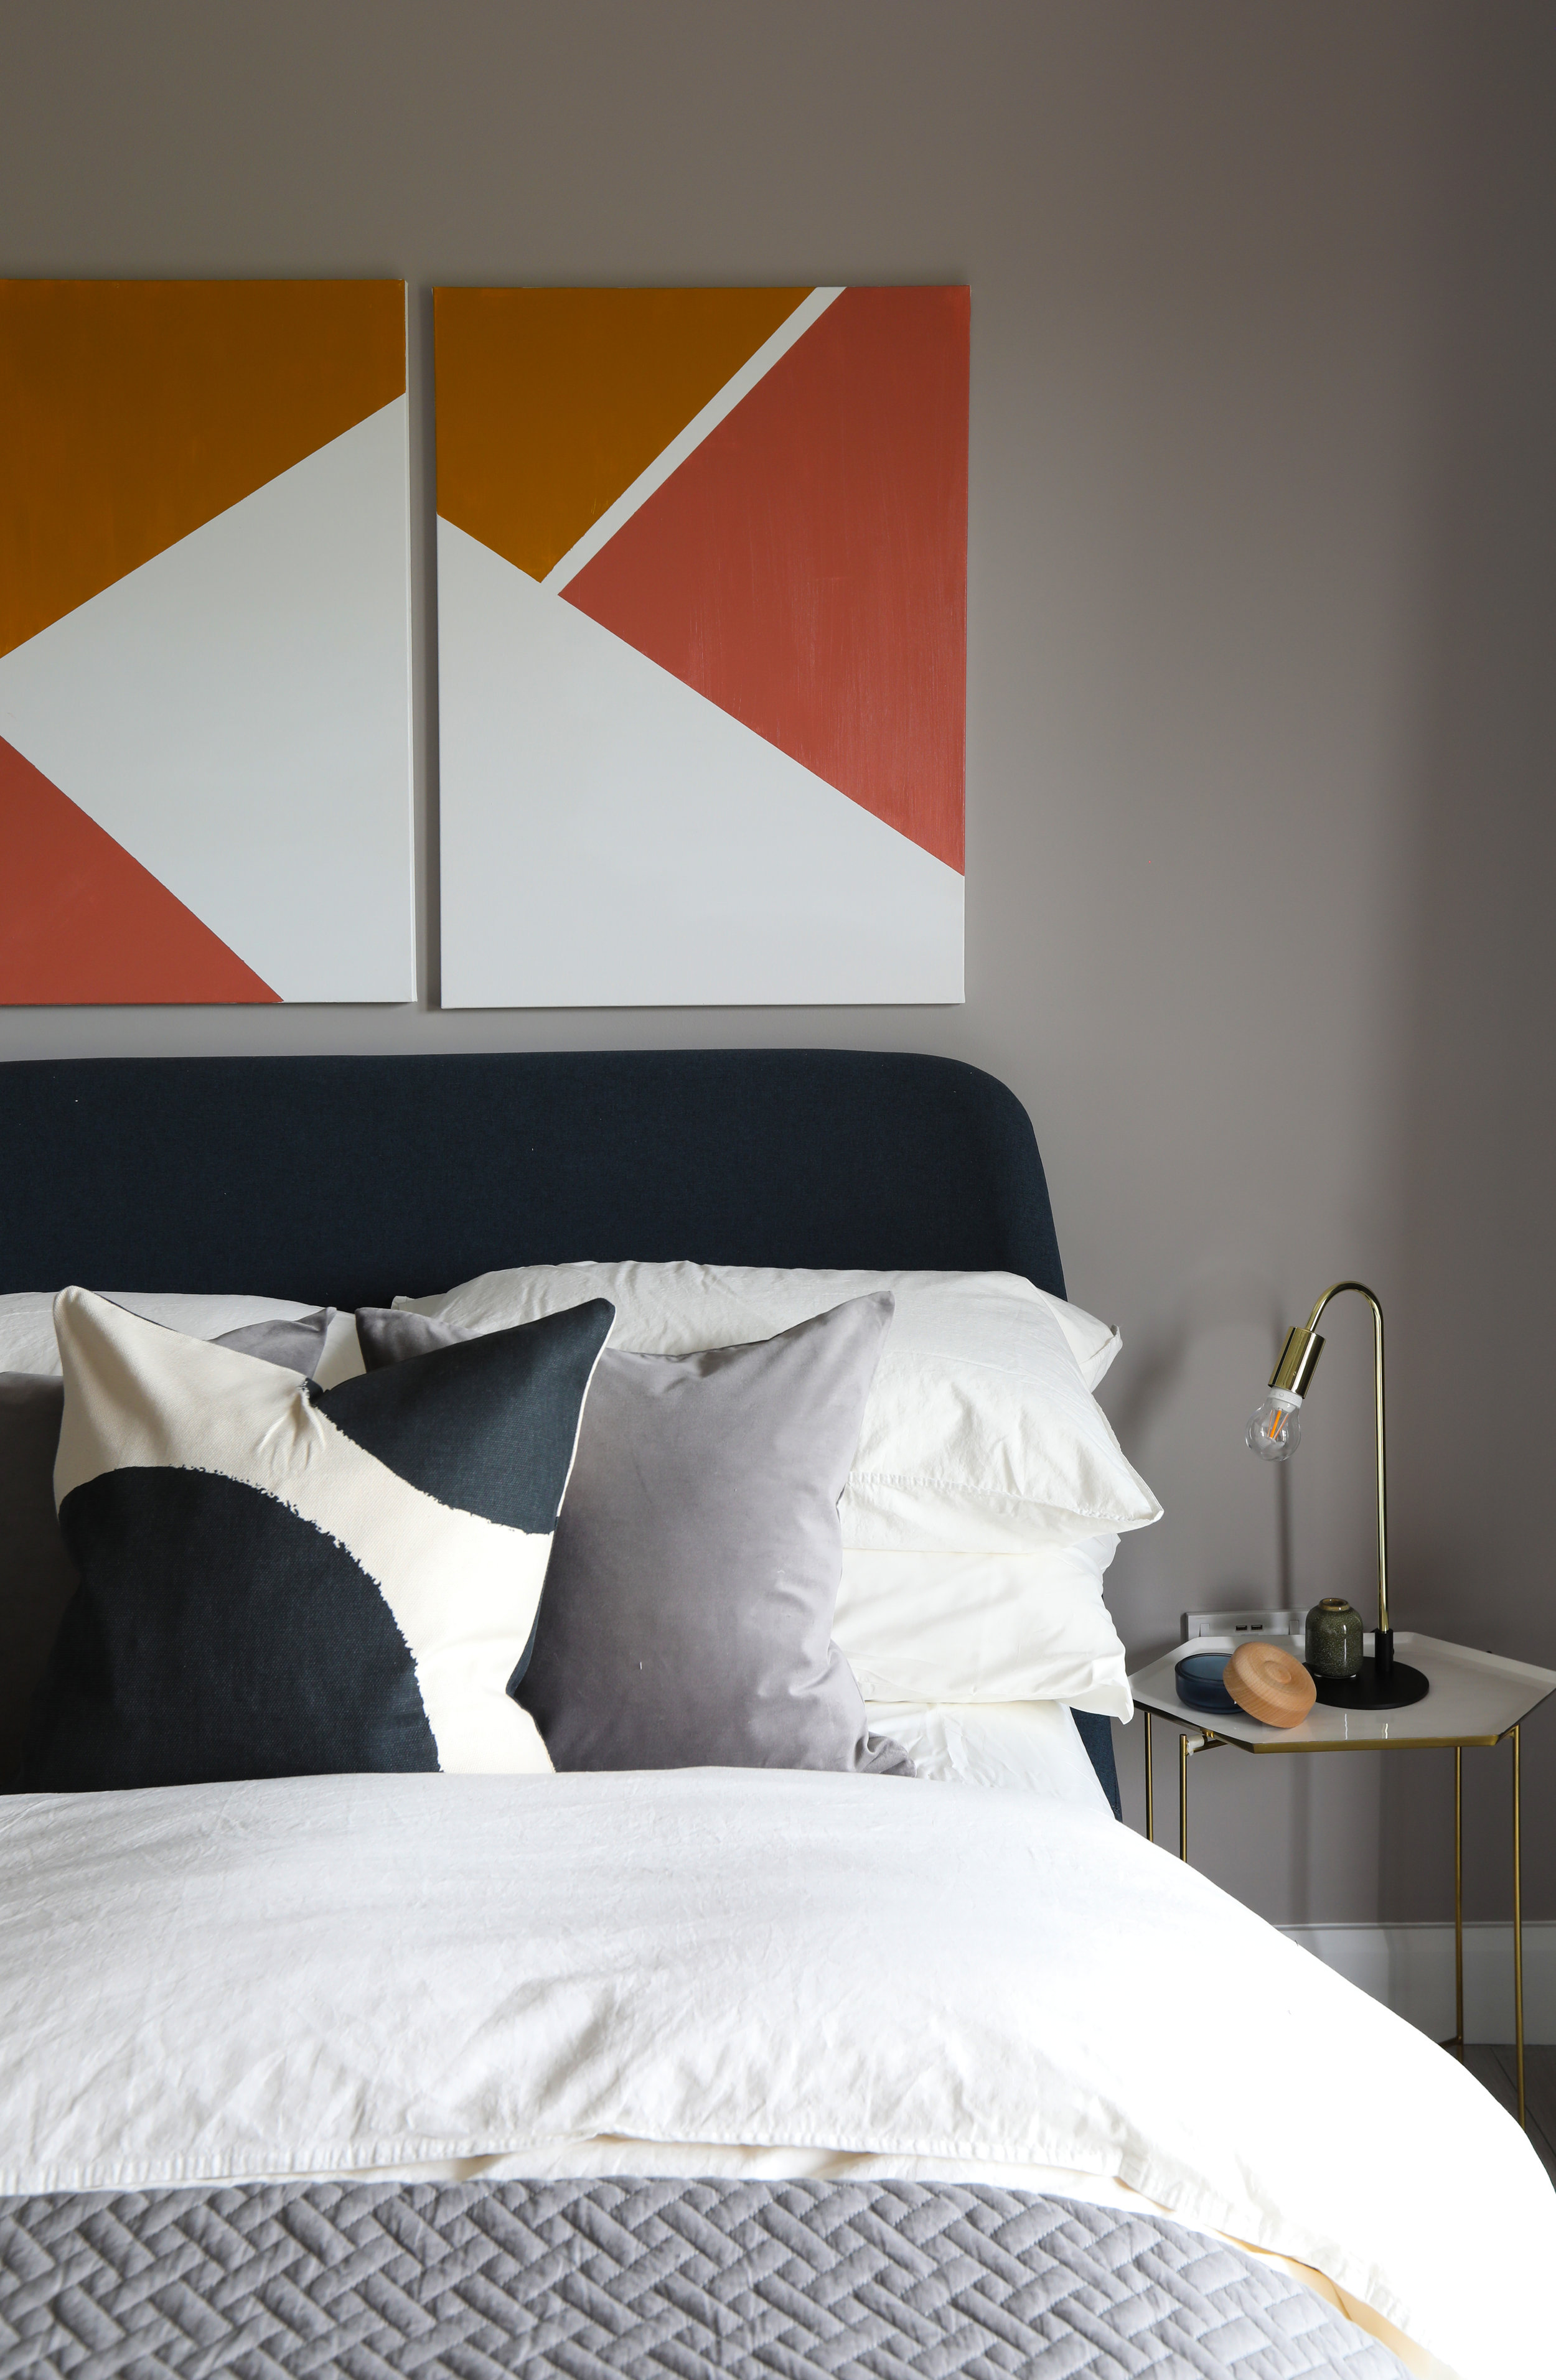 grey bed with orange artwork above